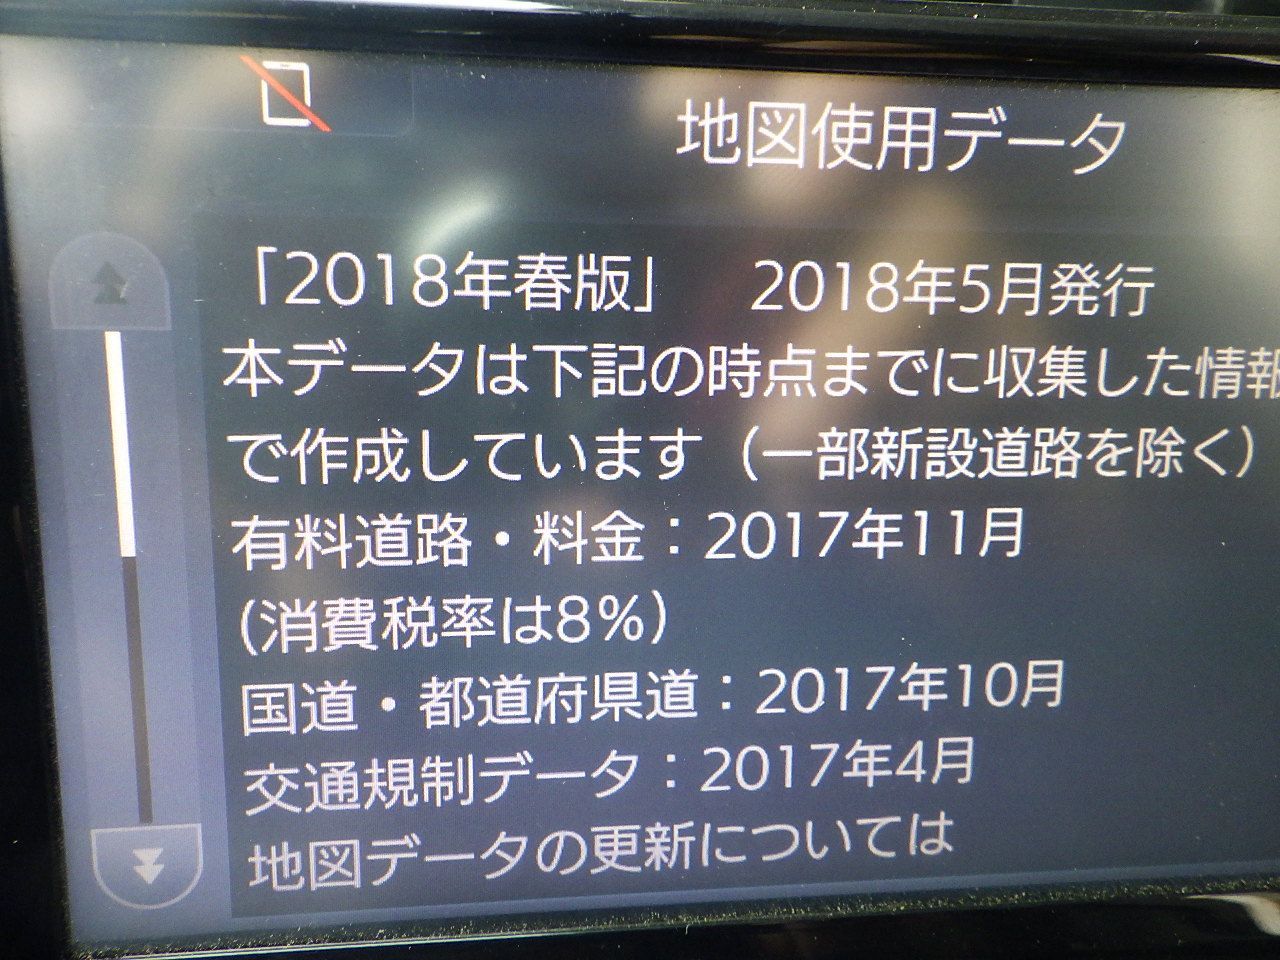 N206-38 トヨタ NSCD-W66 メモリ 1セグナビ 2018年 - カーナビ